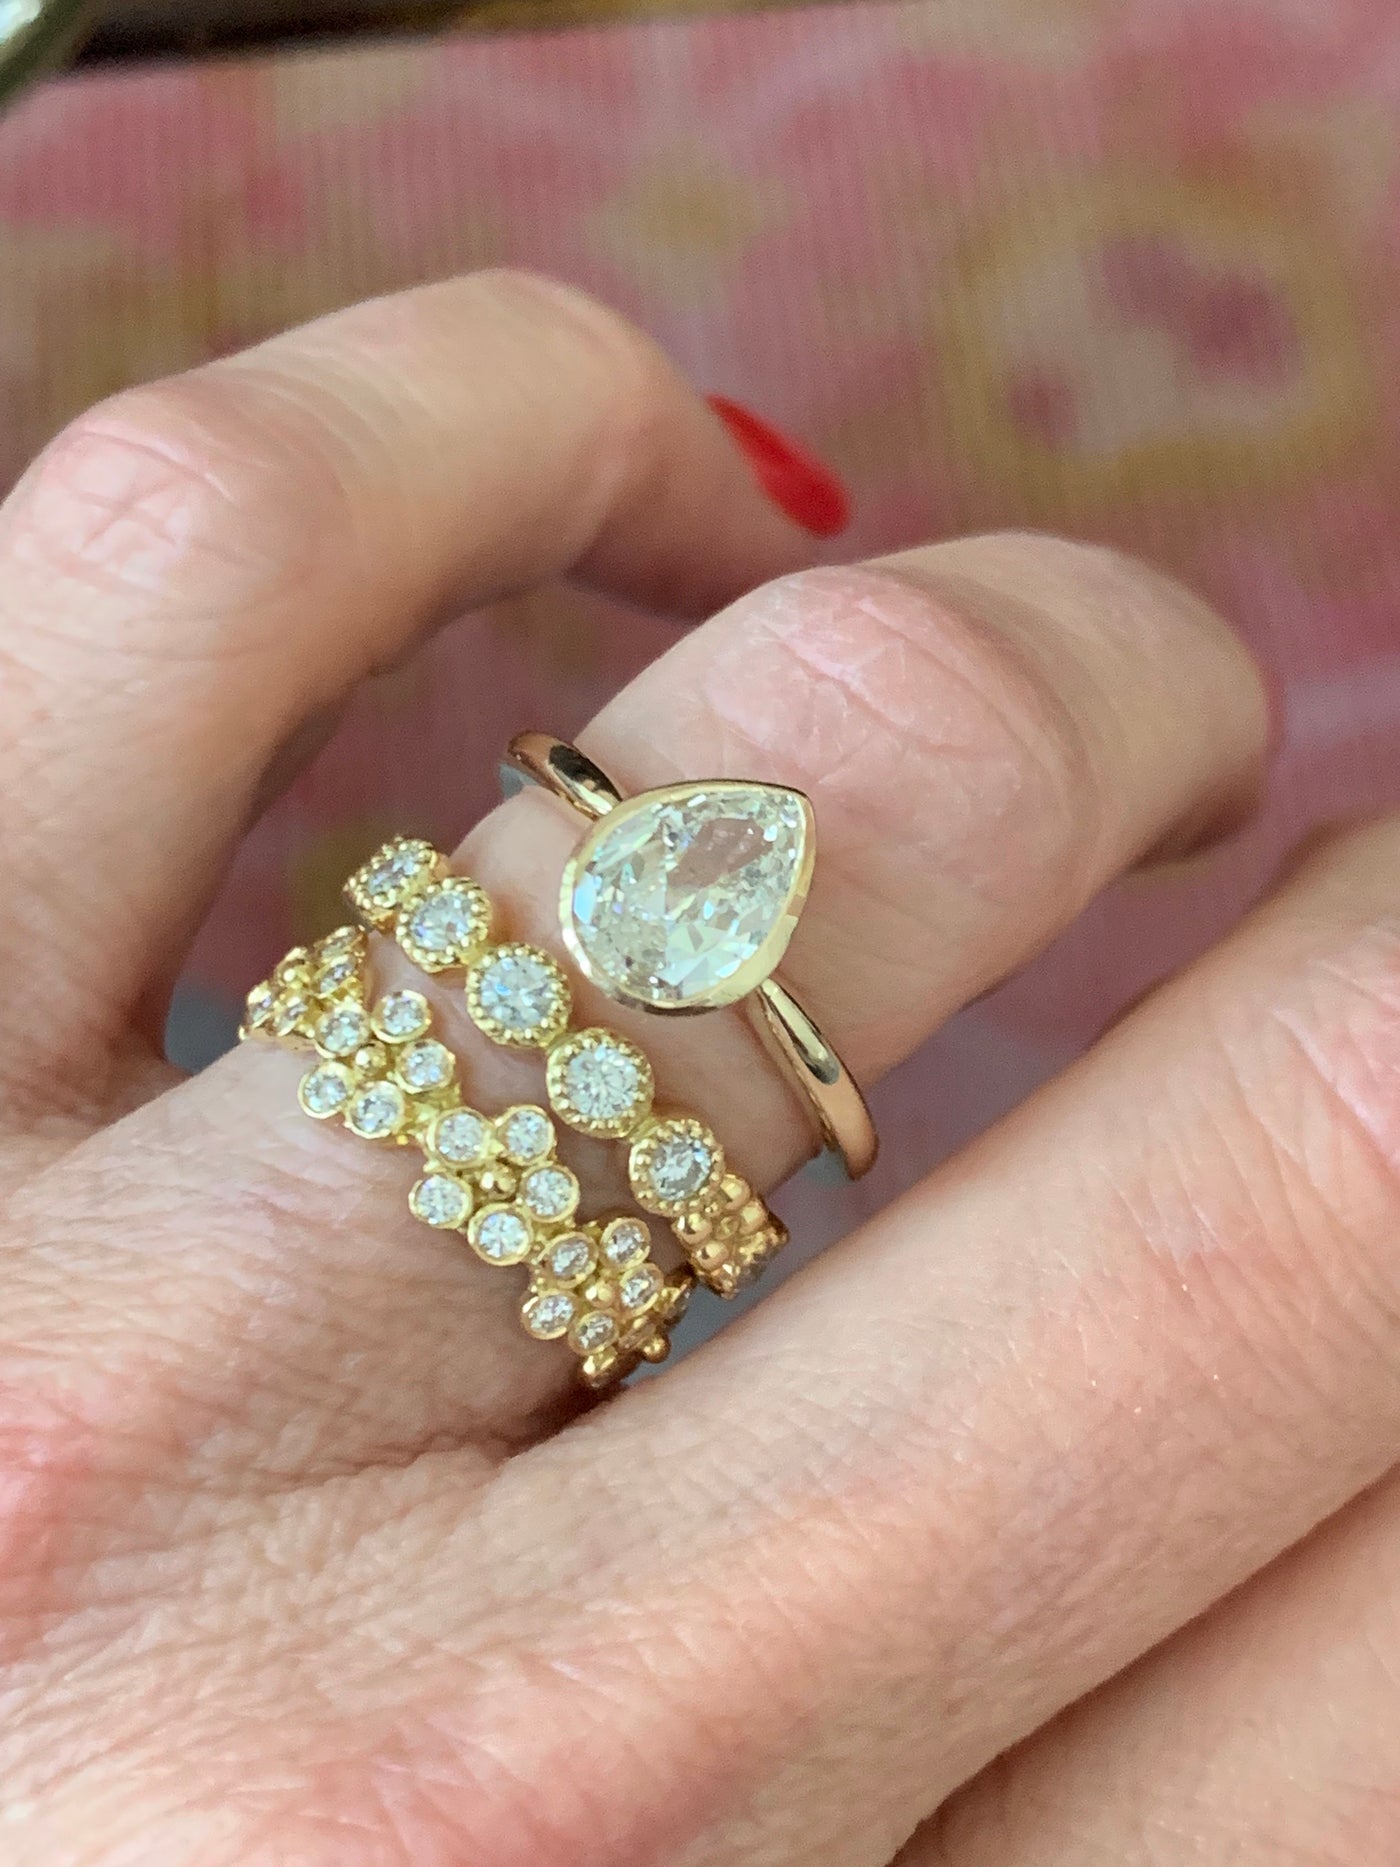 Jasmine Band in 18k Gold with Diamonds - Lauren Sigman Collection